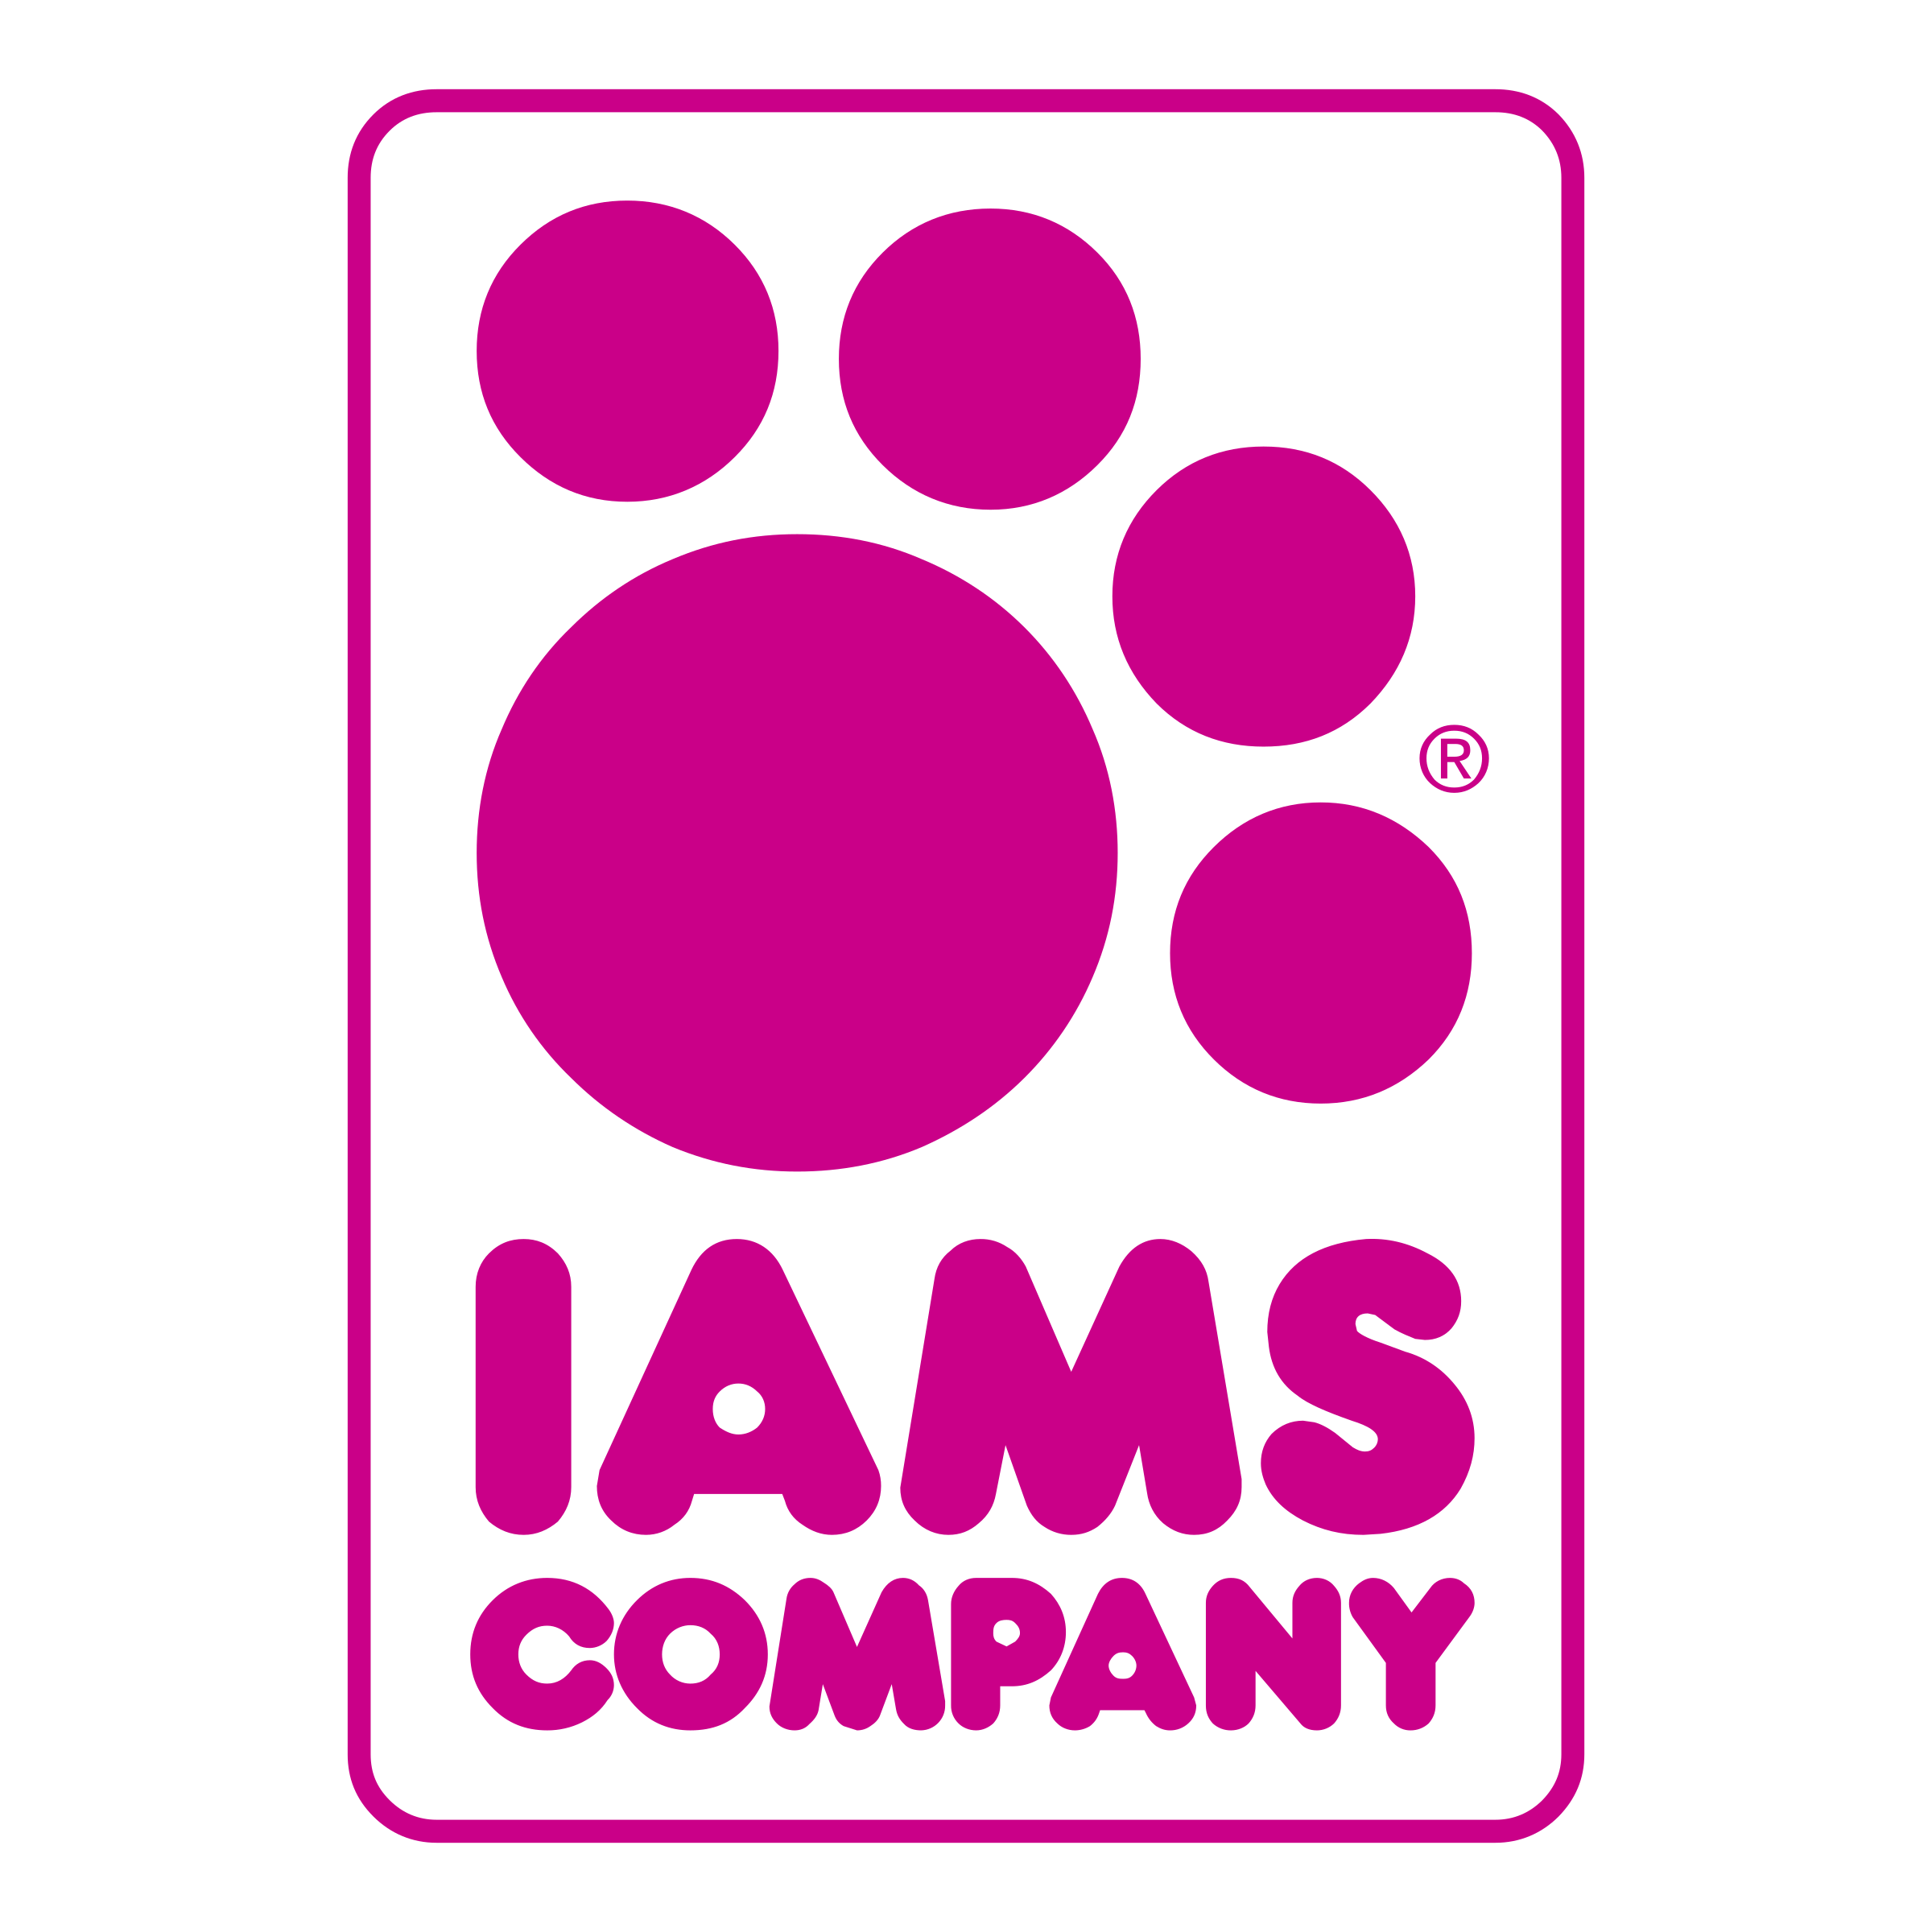 Iams Logo - IAMS Logo PNG Transparent & SVG Vector - Freebie Supply